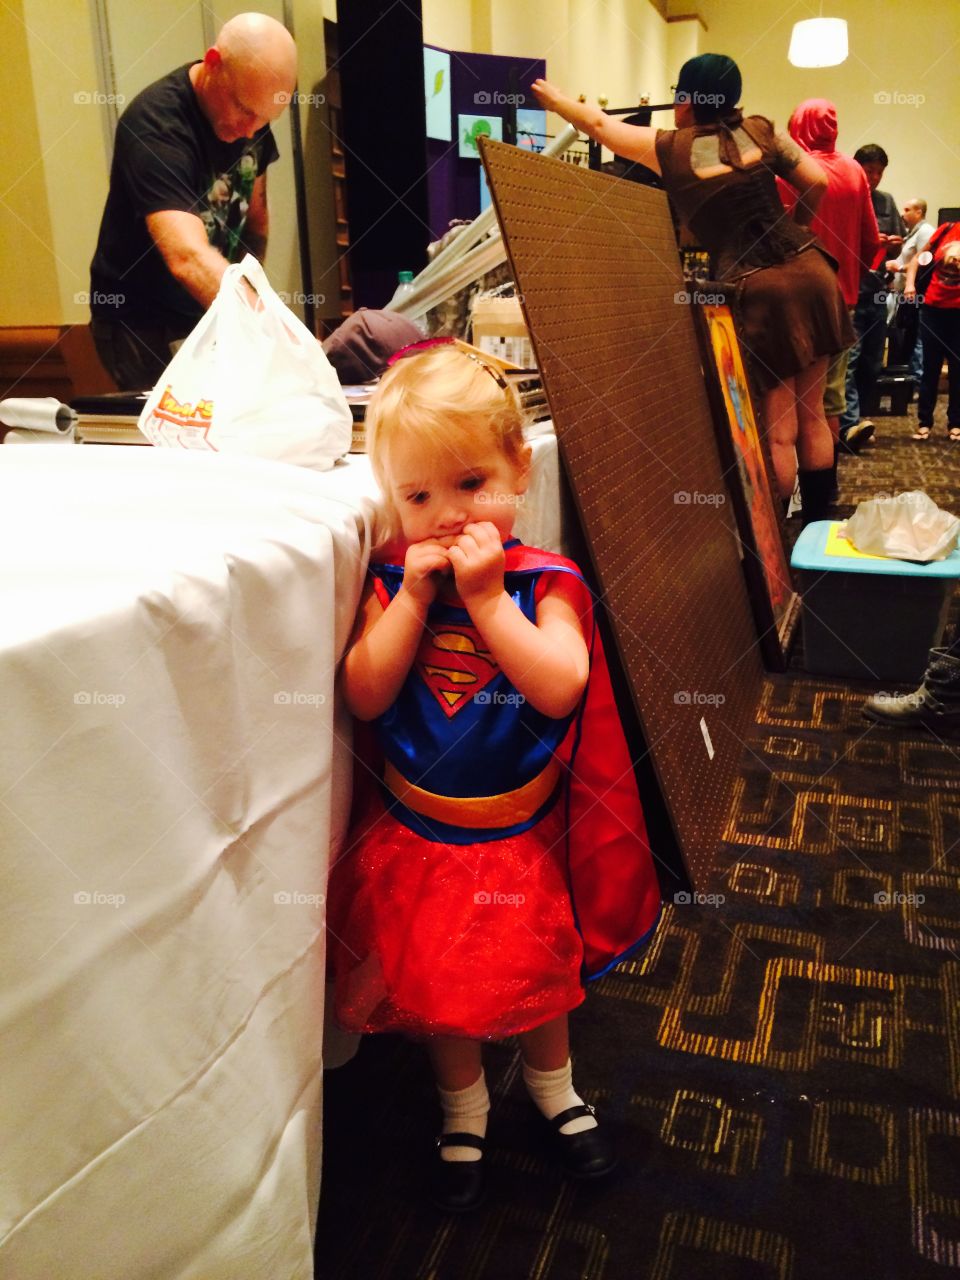 Child super hero 
Super girl